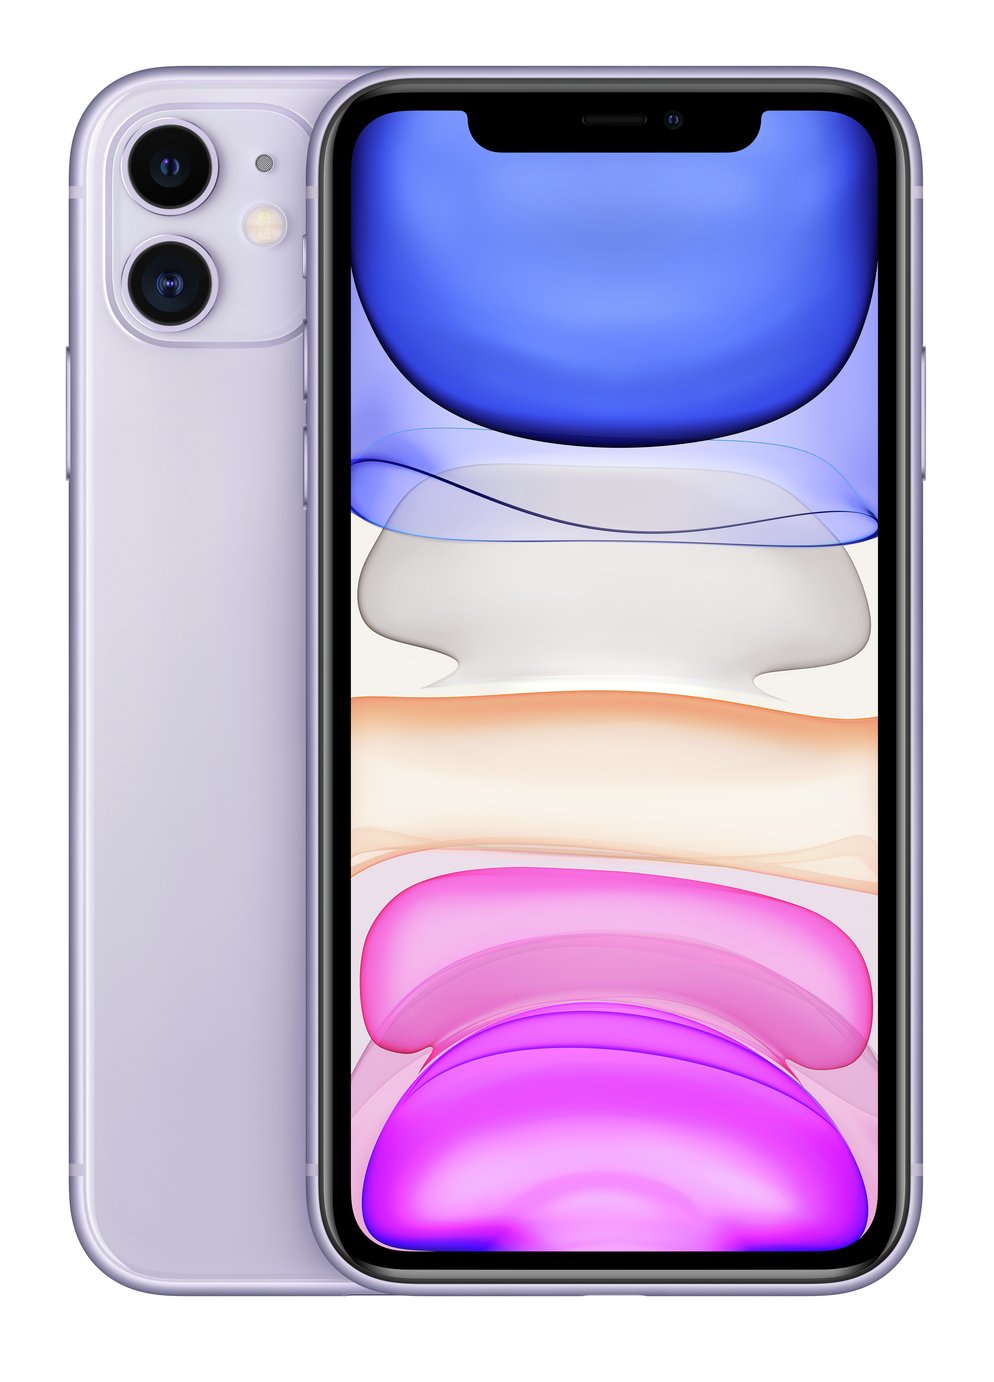 SIM Free iPhone 11 256GB Mobile Phone - Purple